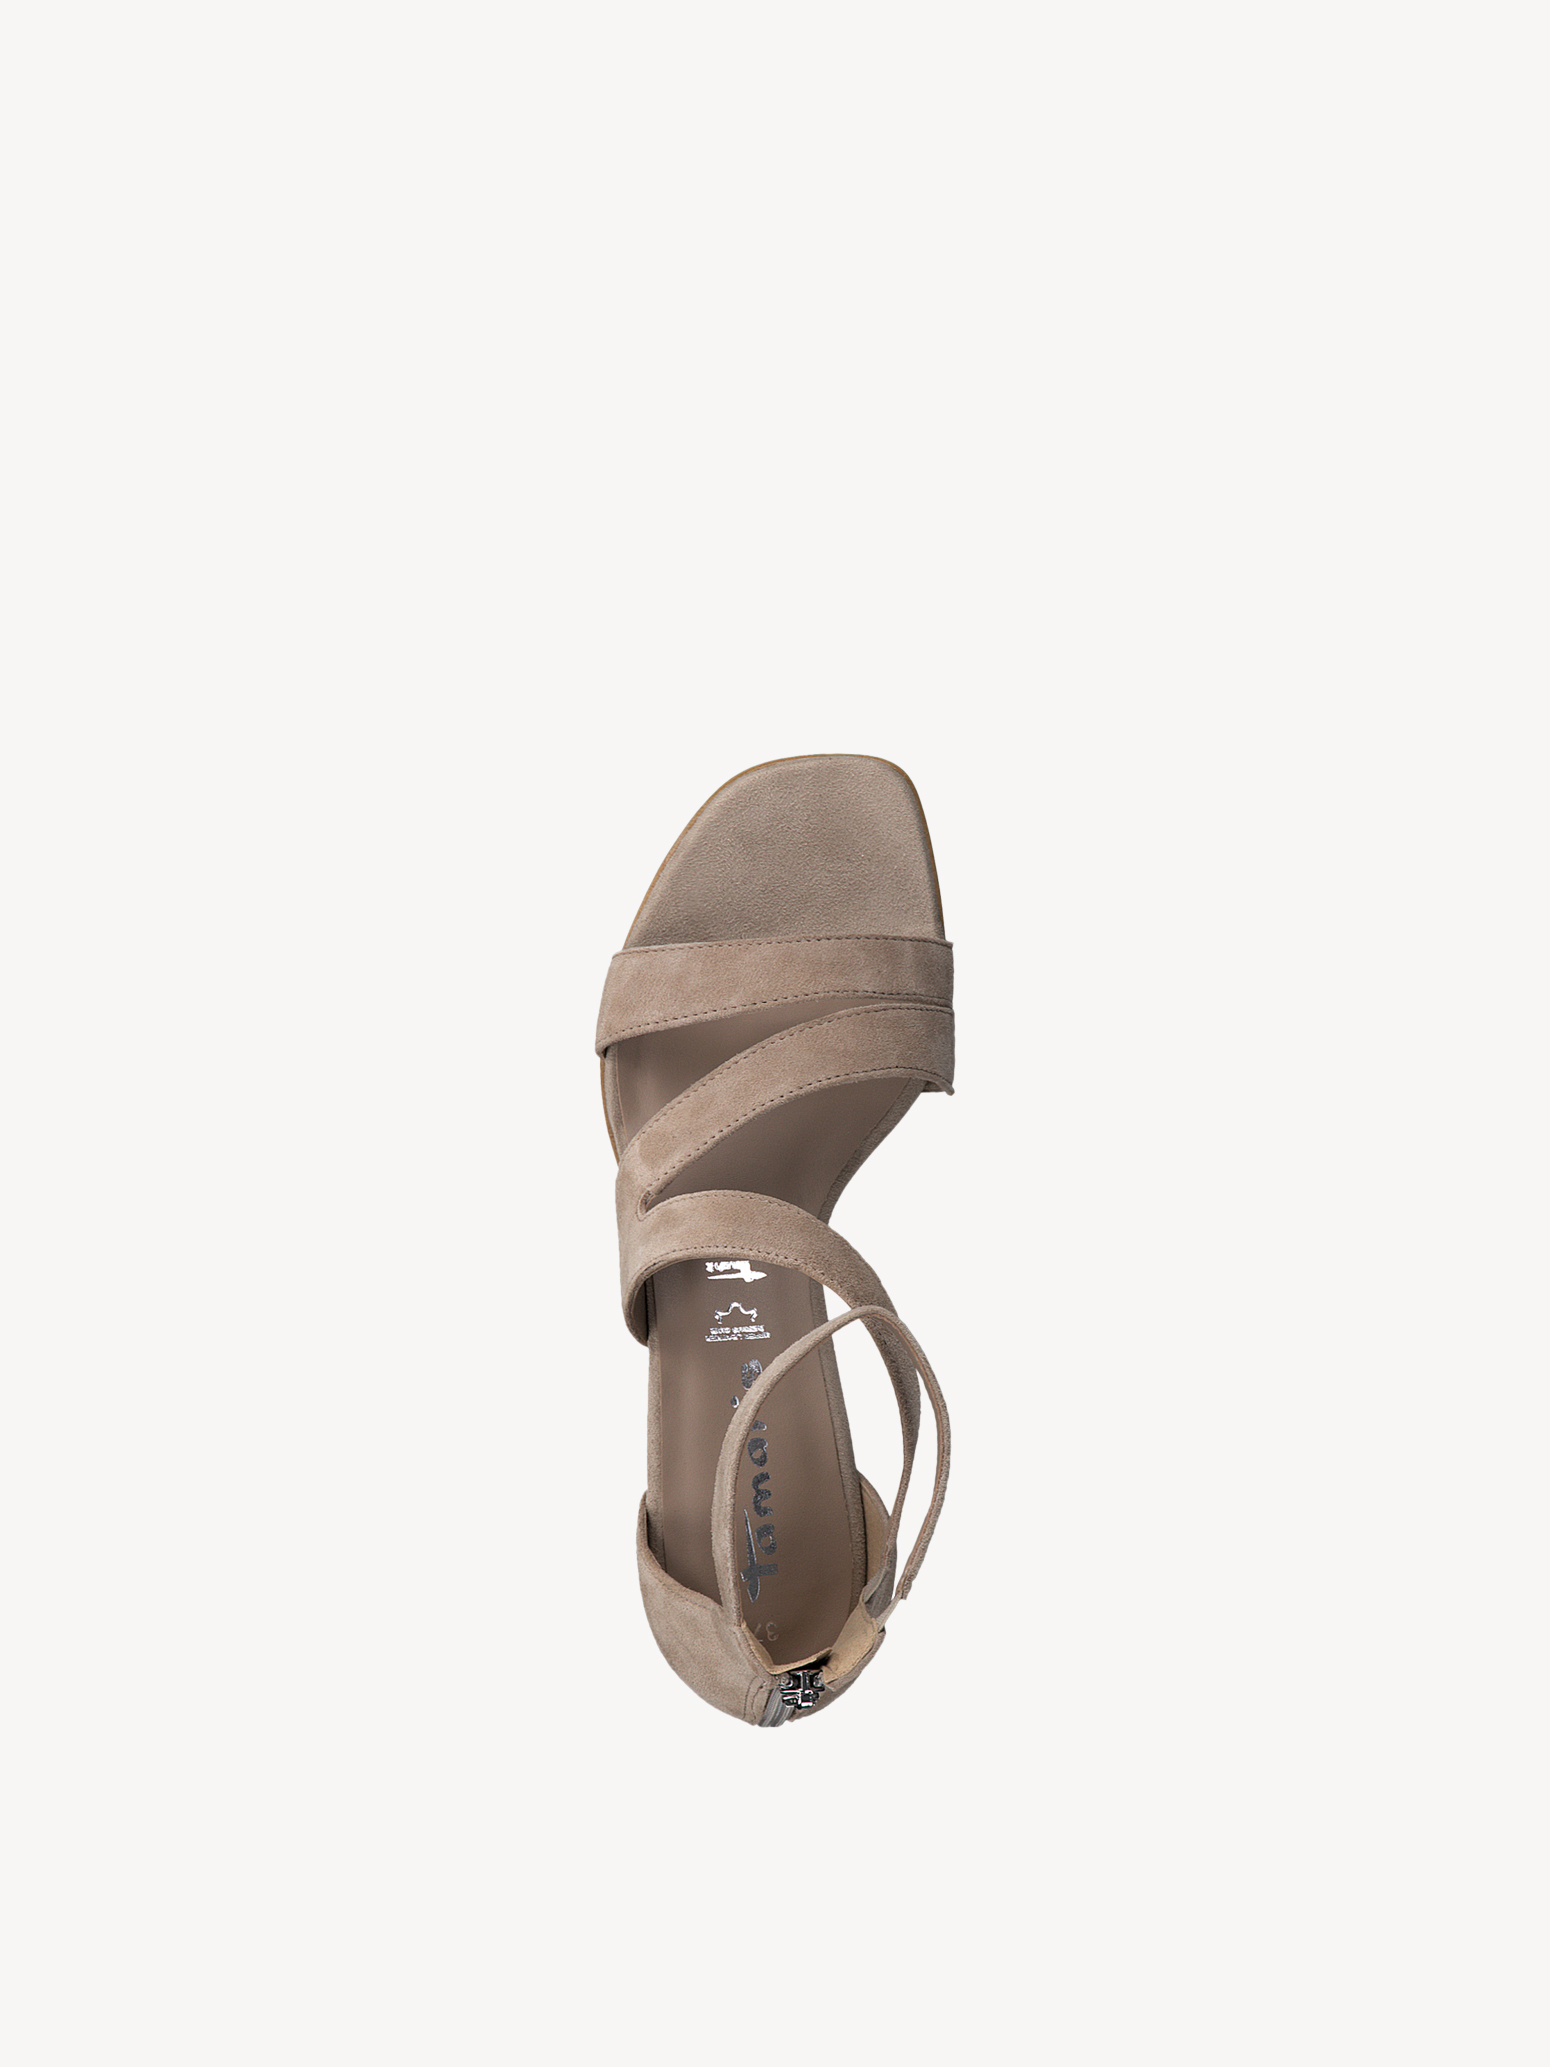 Leather Heeled sandal - beige, TAUPE, hi-res